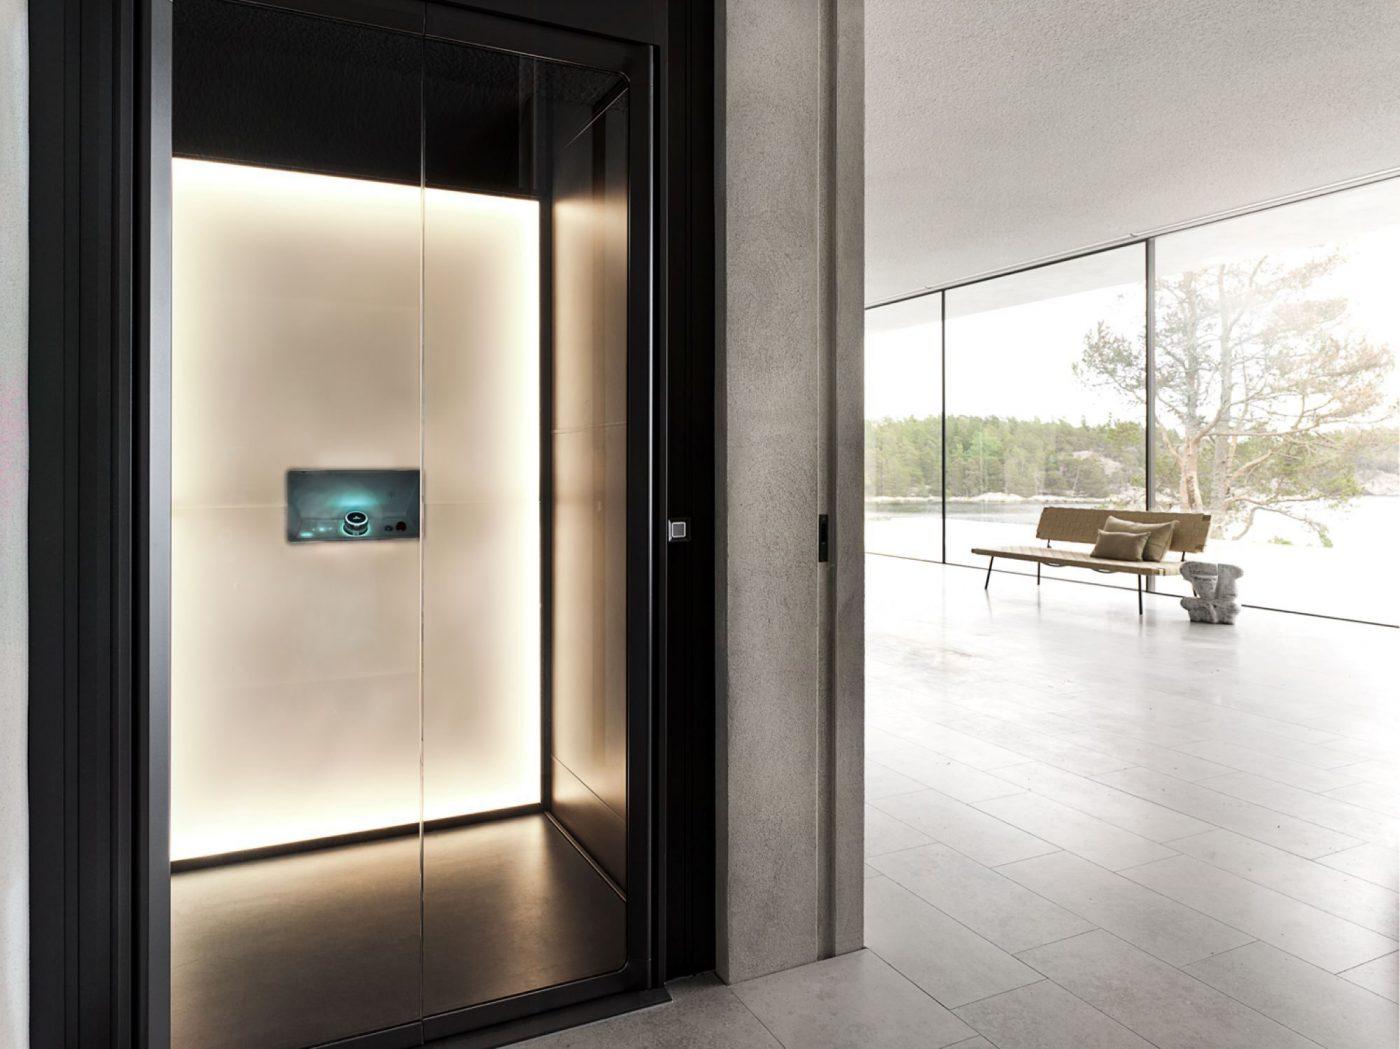 Home lift/elevator in modern livingroom in Stockholm archipelago villa. Model: Aritco HomeLift